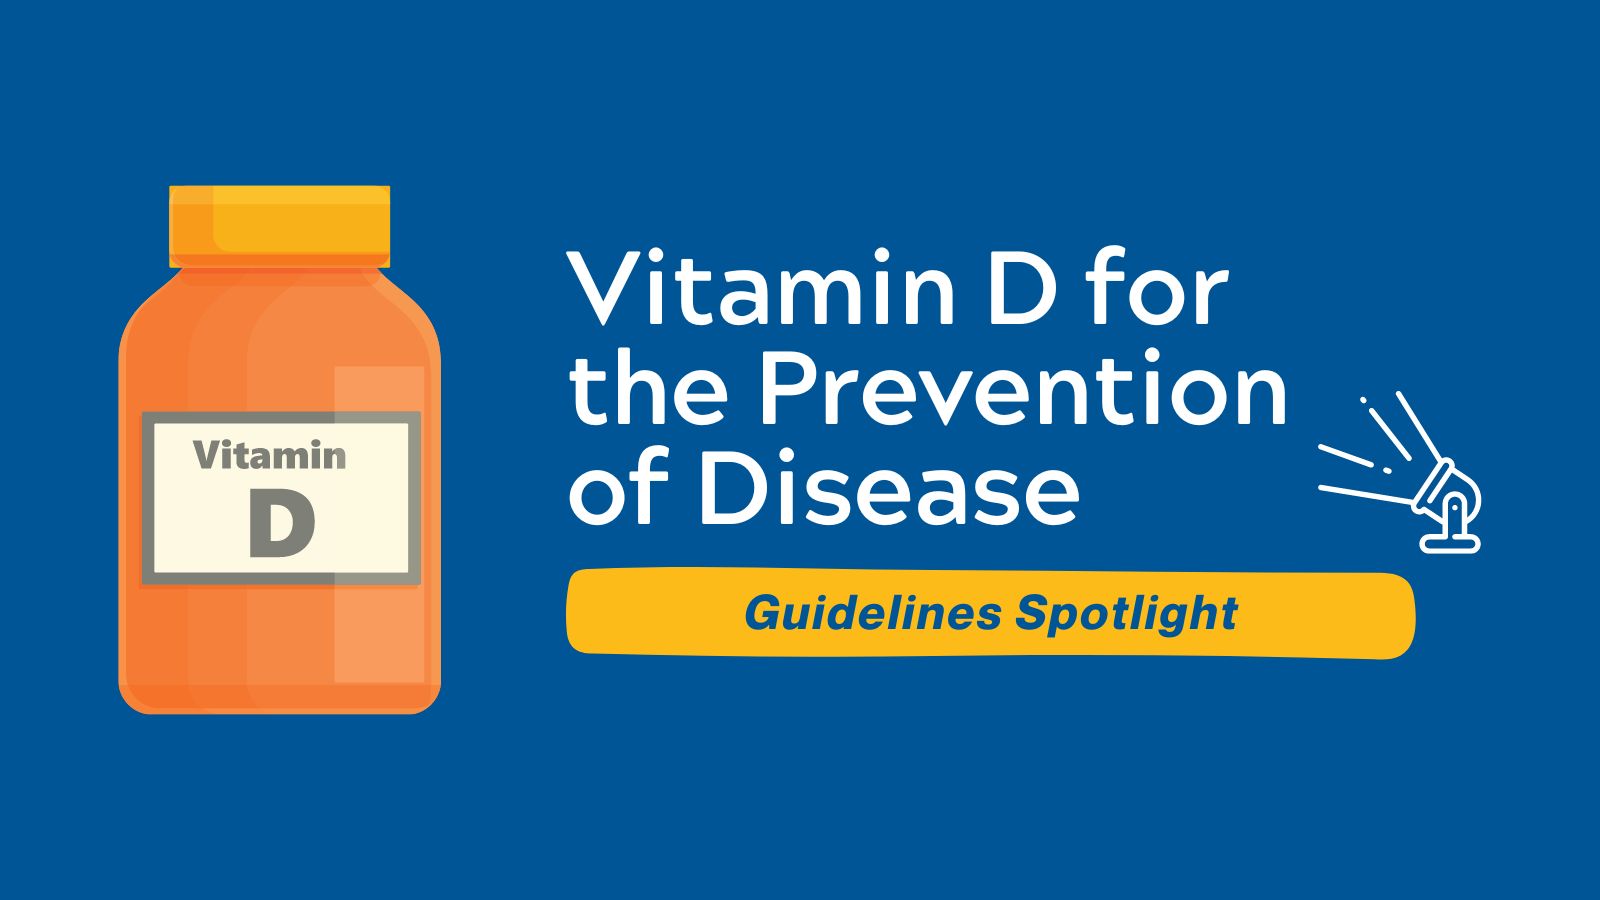 Guidelines Spotlight - Vitamin D for the Prevention of Disease